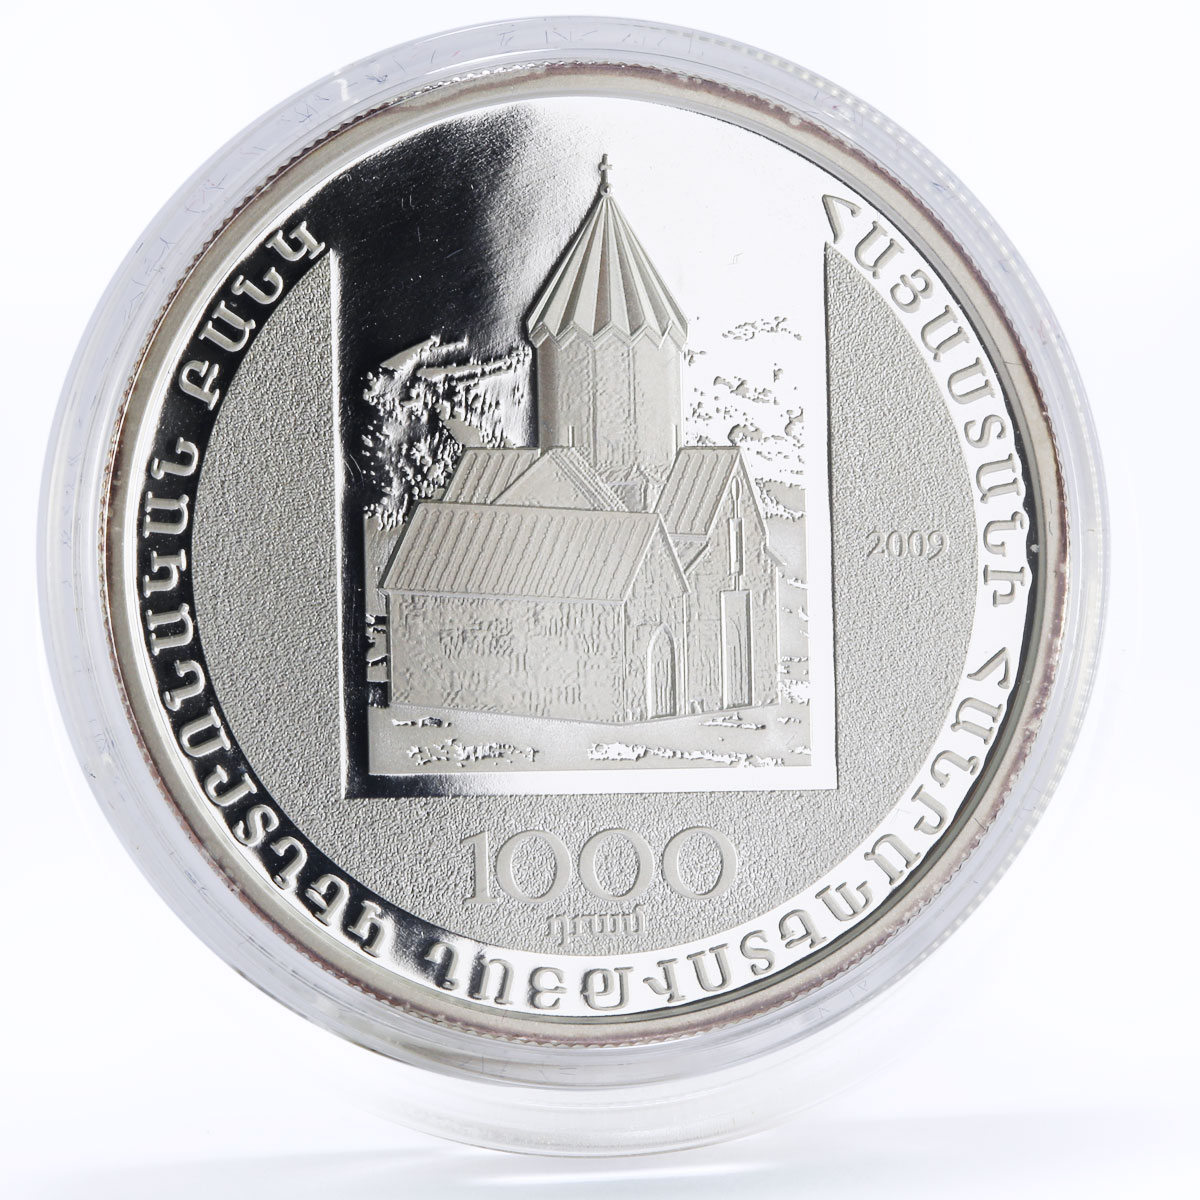 Armenia 1000 dram 725th Anniversary of the Gladzor University silver coin 2009